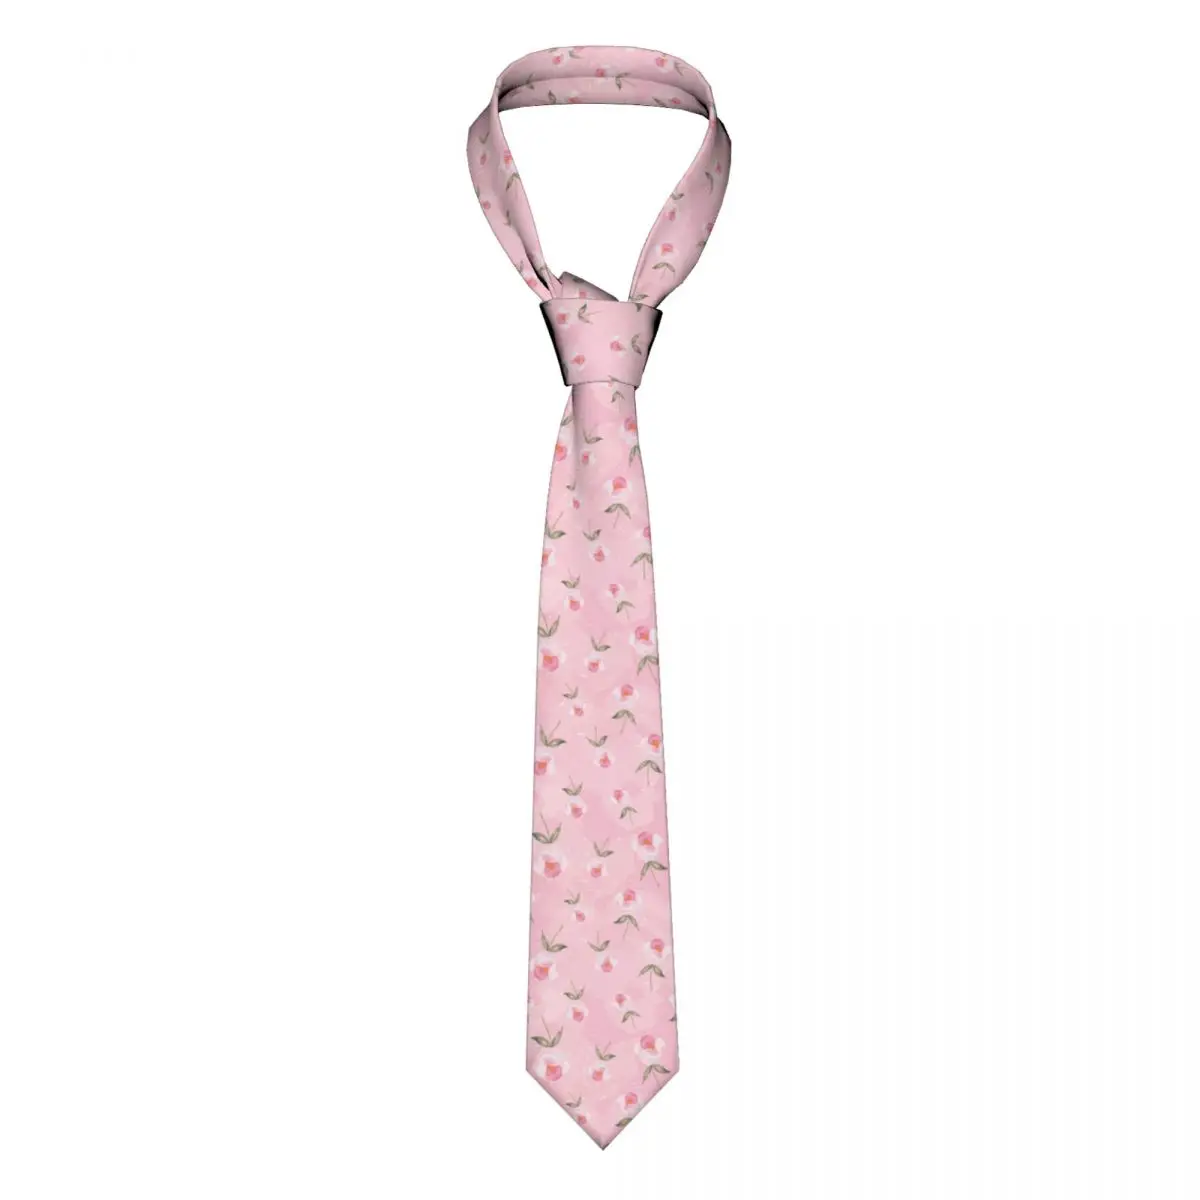 

Retor Wildflowers Flower Neckties Unisex Casual Polyester 8 cm Wide Neck Ties for Men Daily Wear Cravat Party